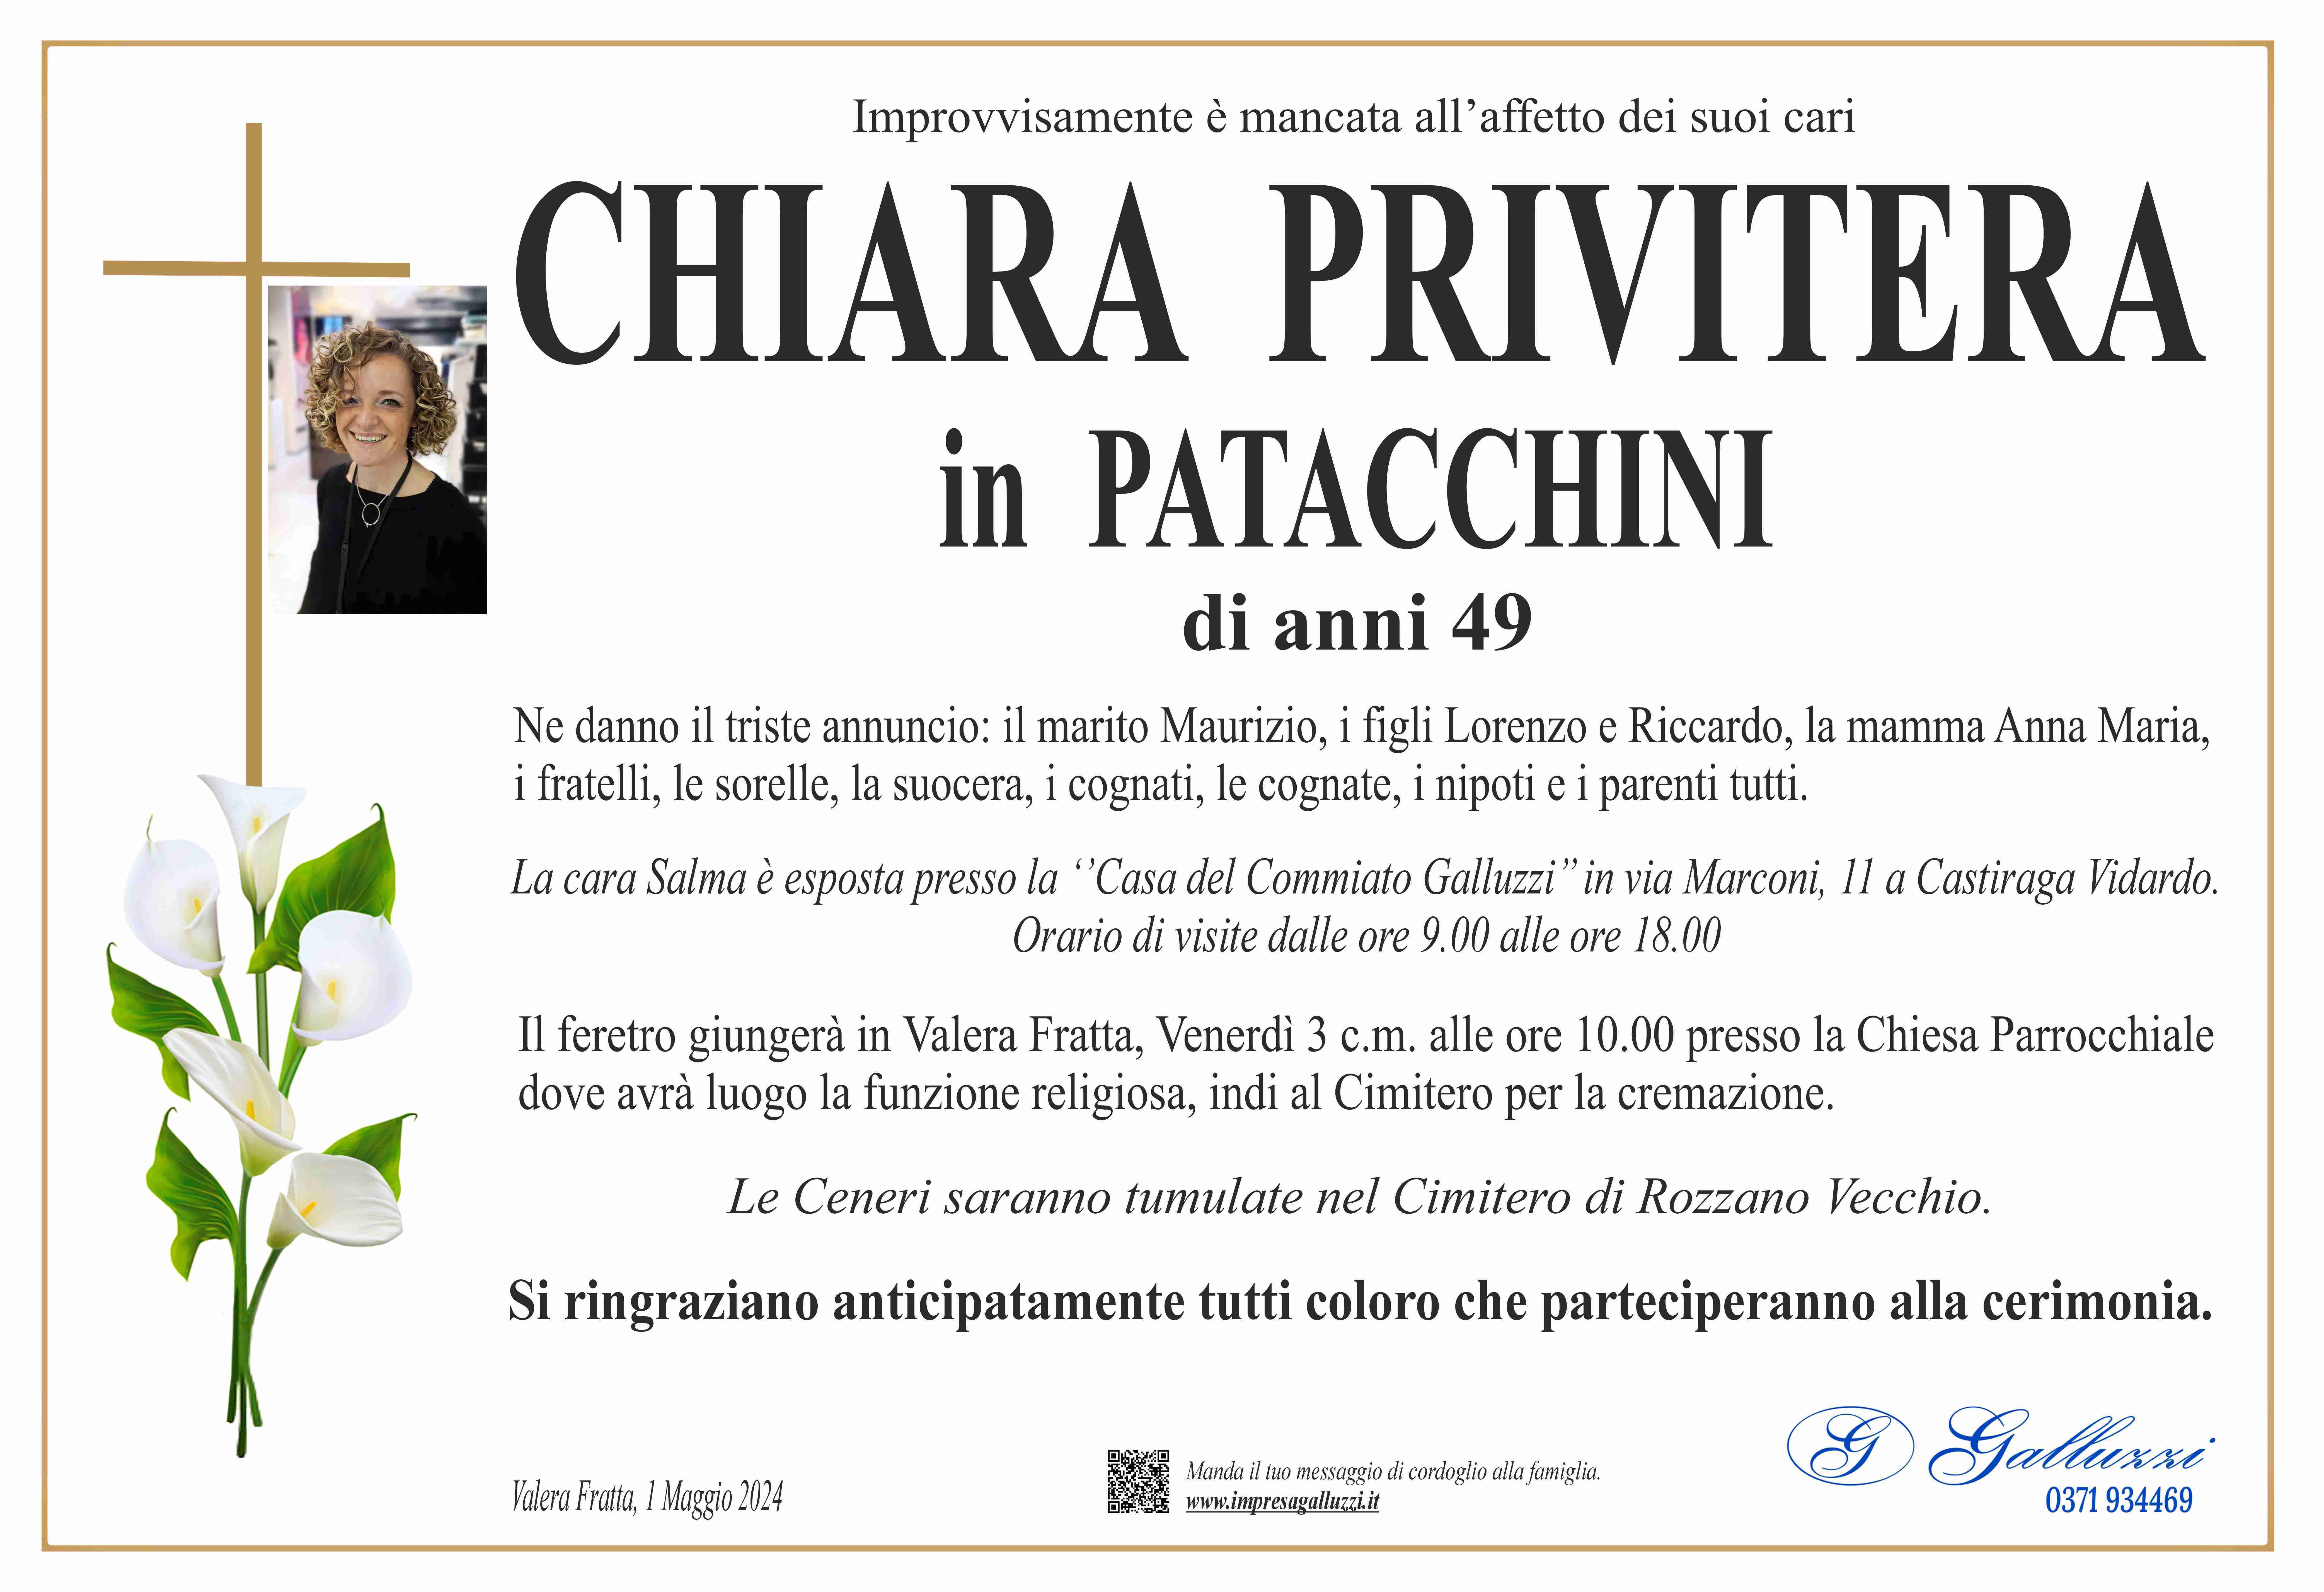 Chiara Privitera